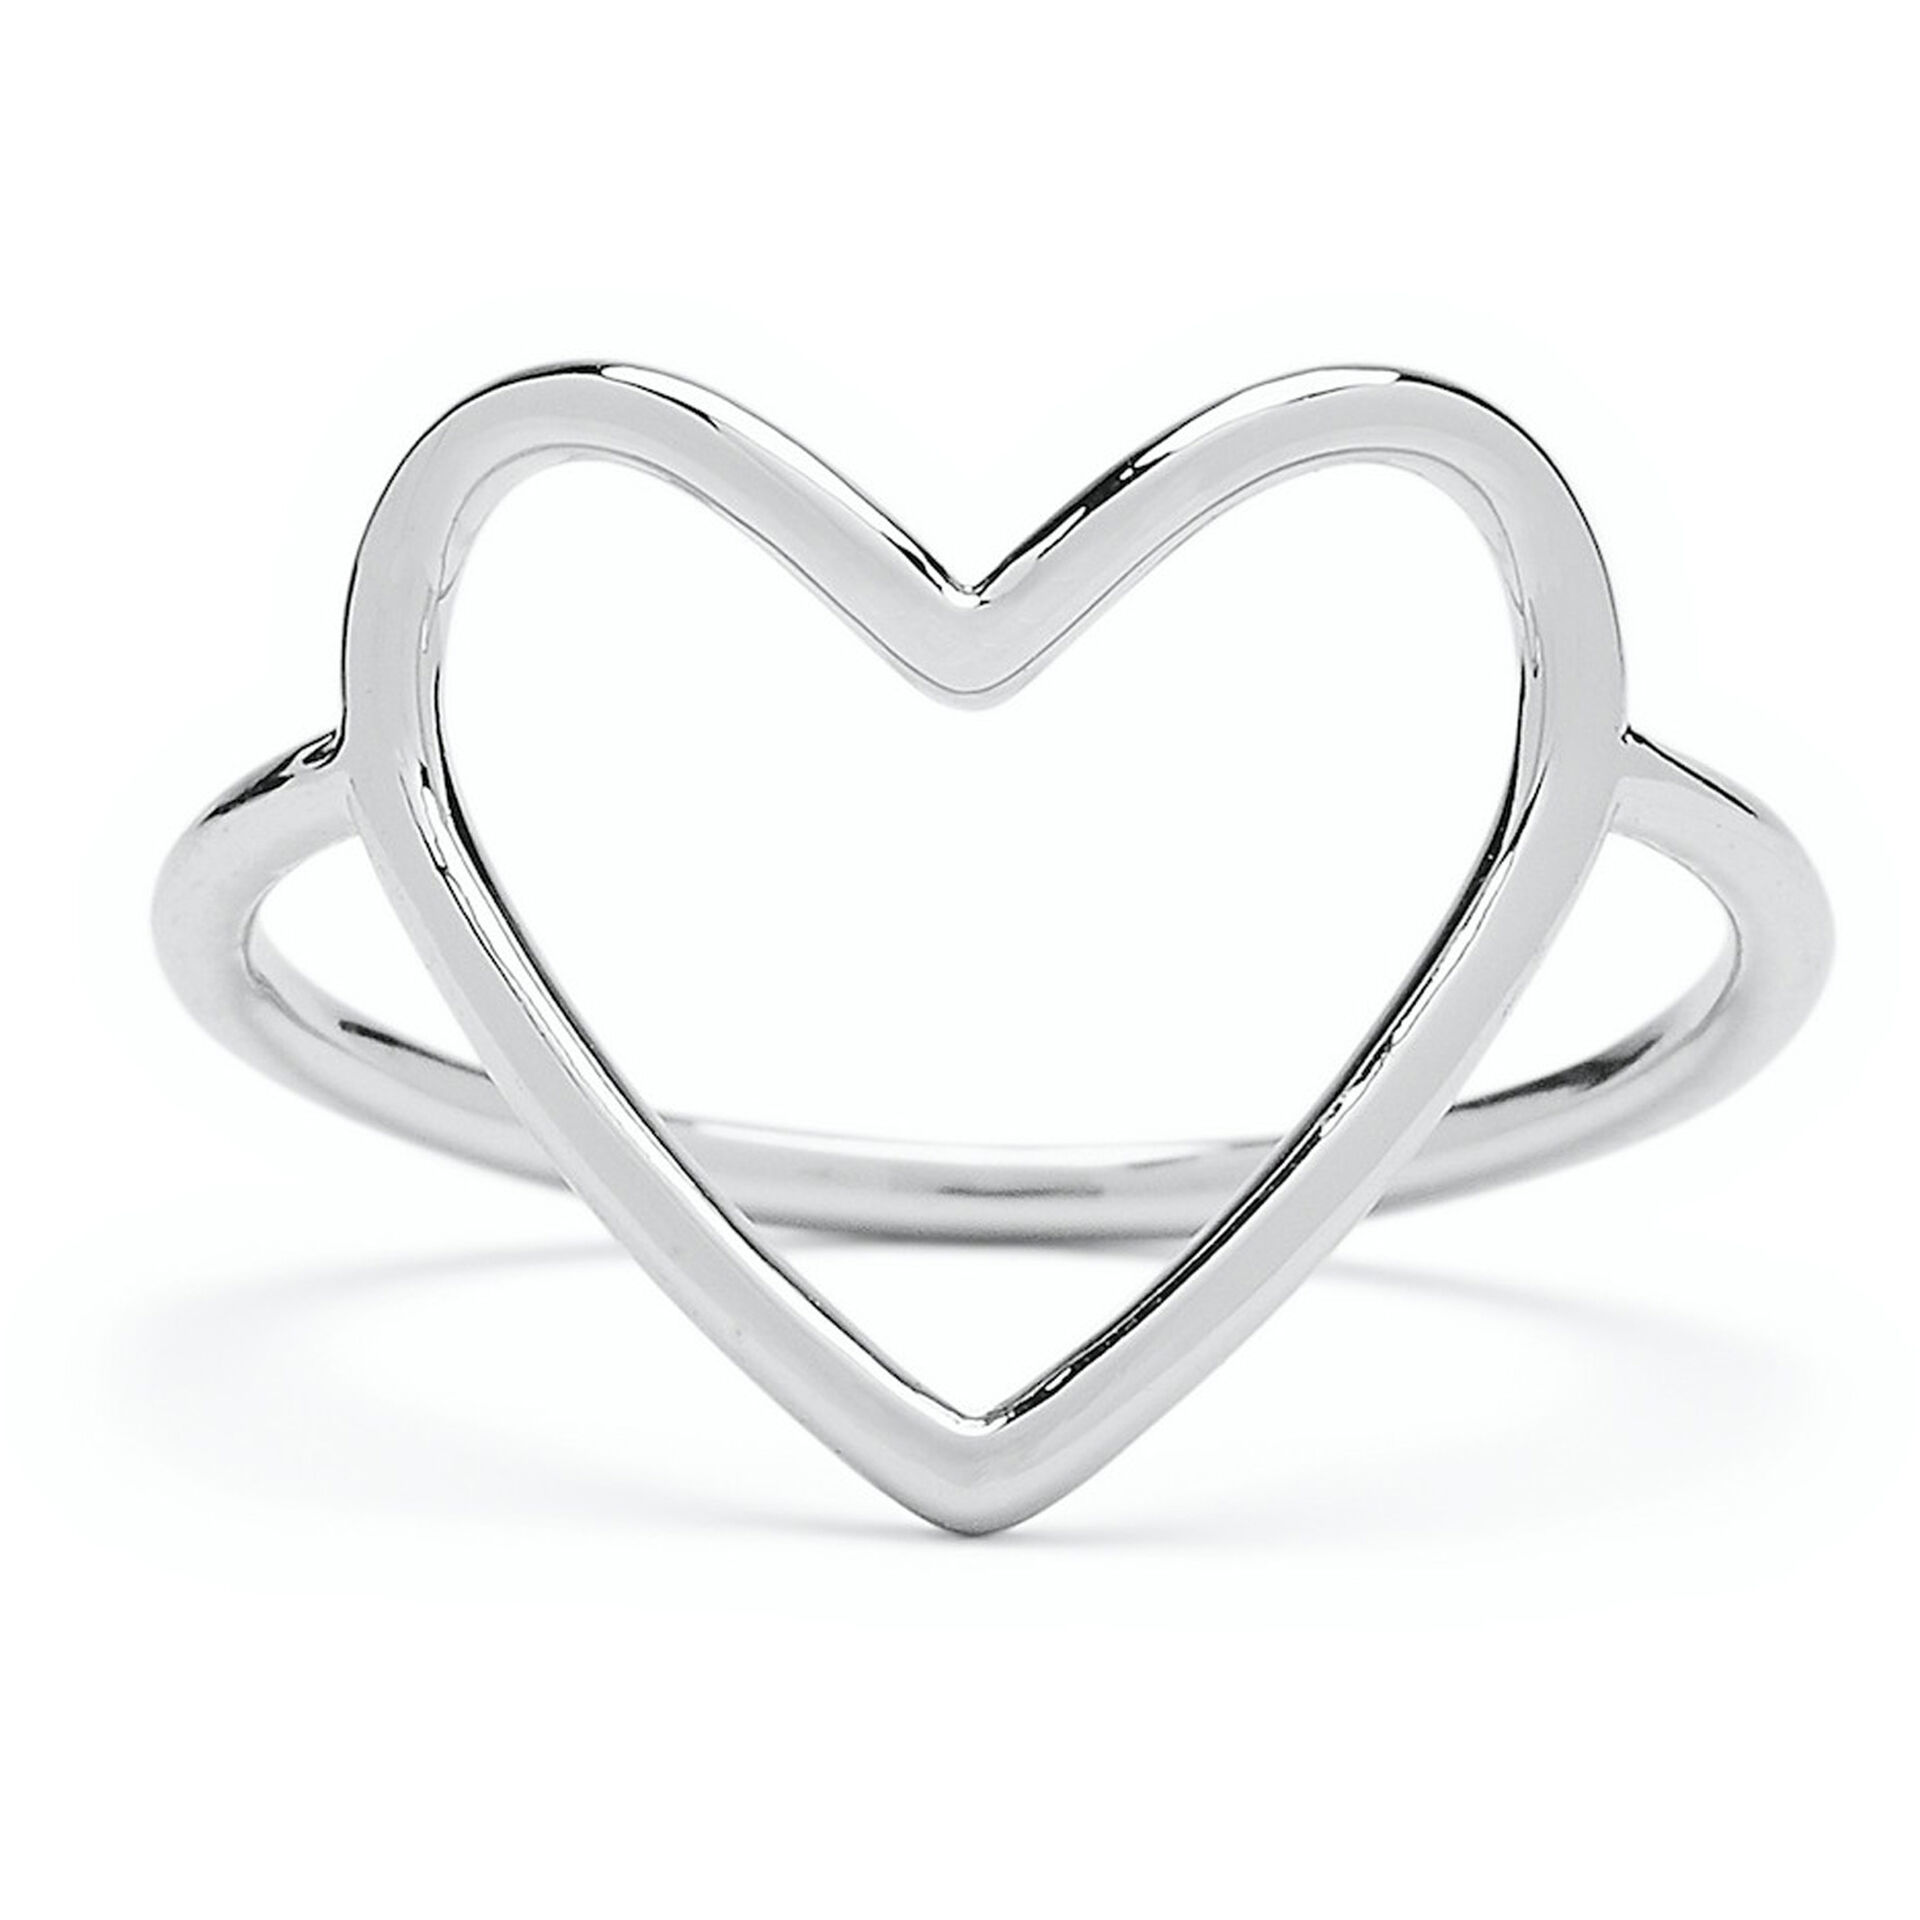 Pura Vida Big Heart Silver Ring Size 7 Jewelry Hallmark